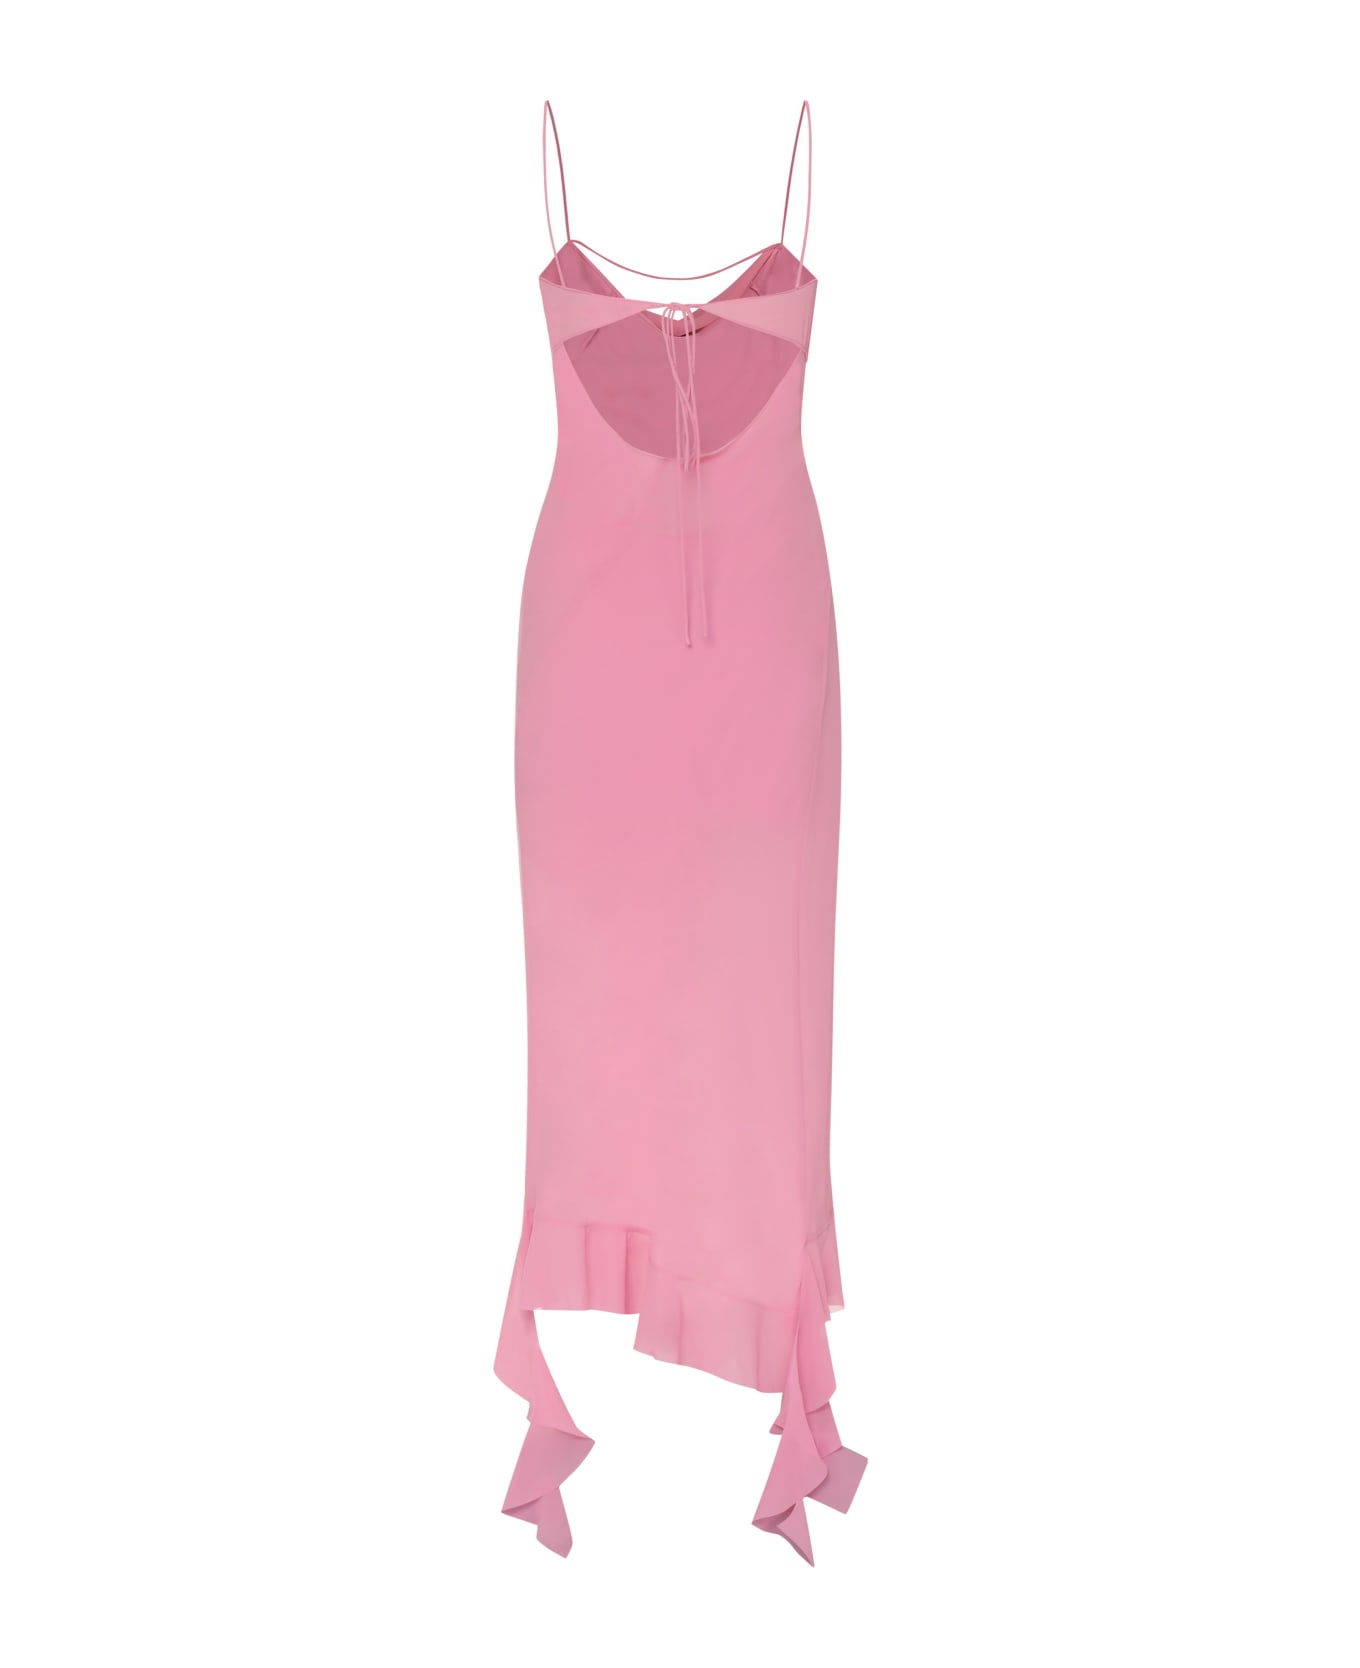 Acne Studios Frill Dress - Pink